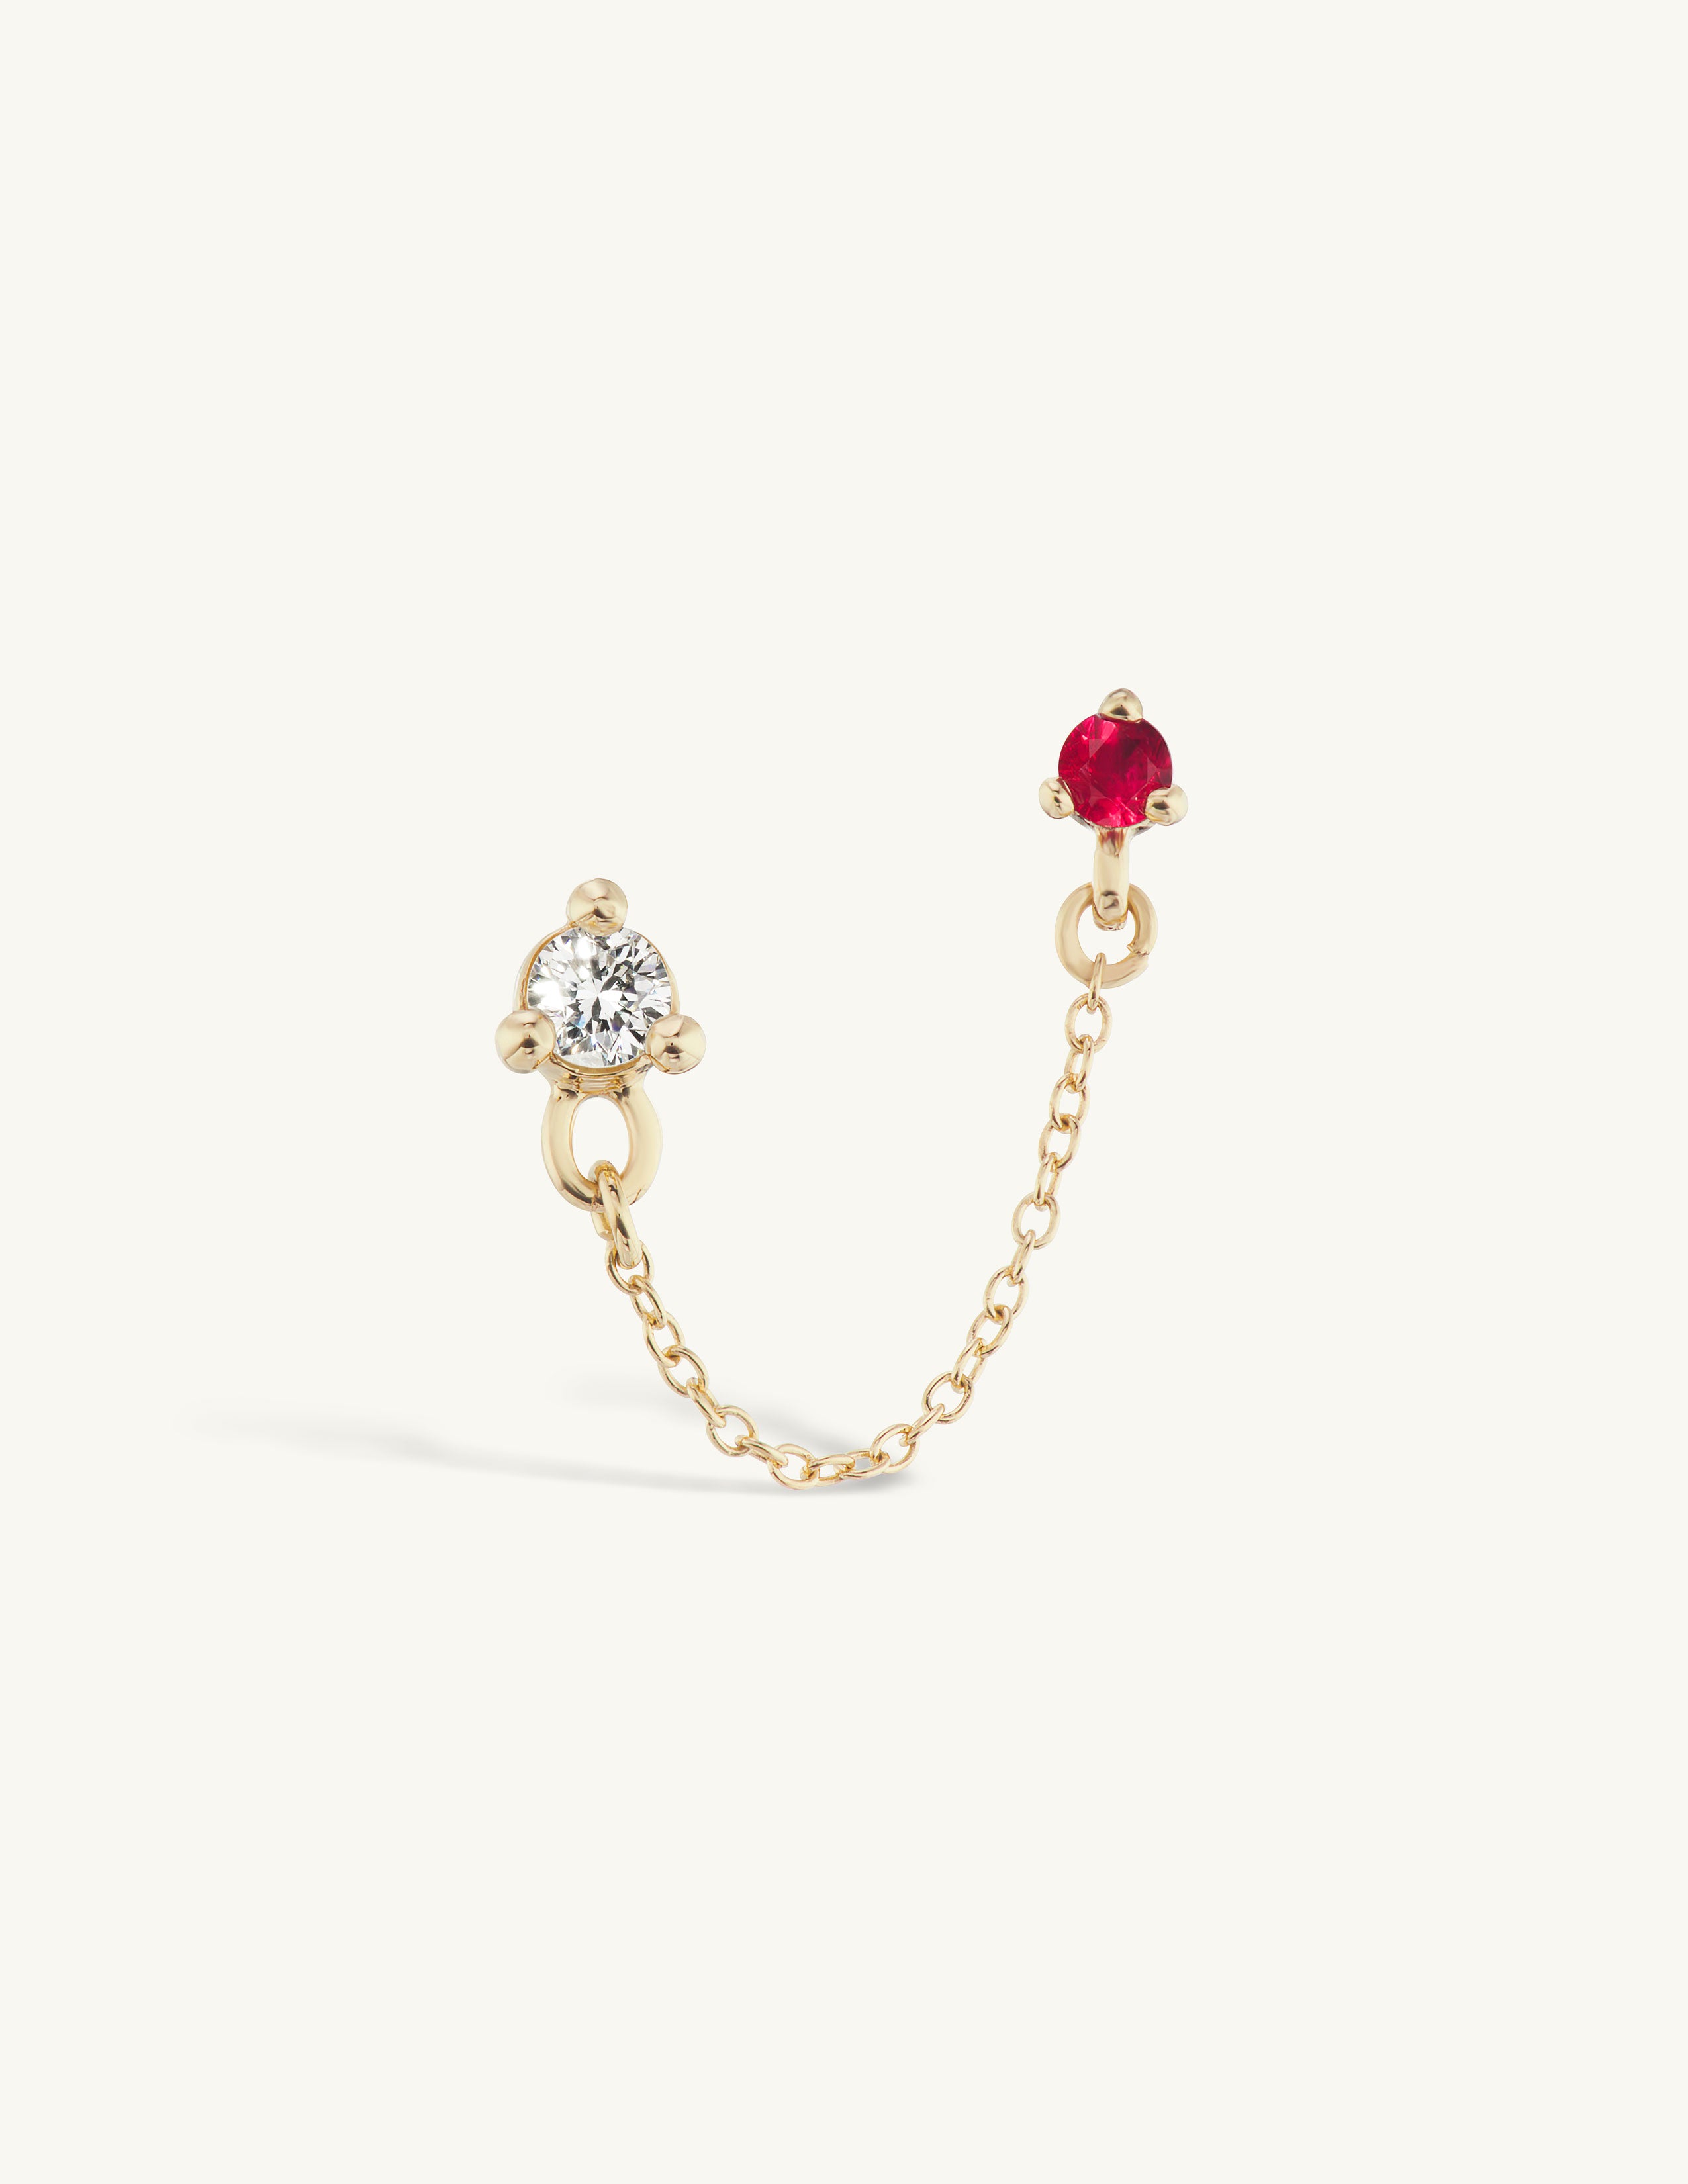 Two-Piercing Diamond and Ruby Earrings